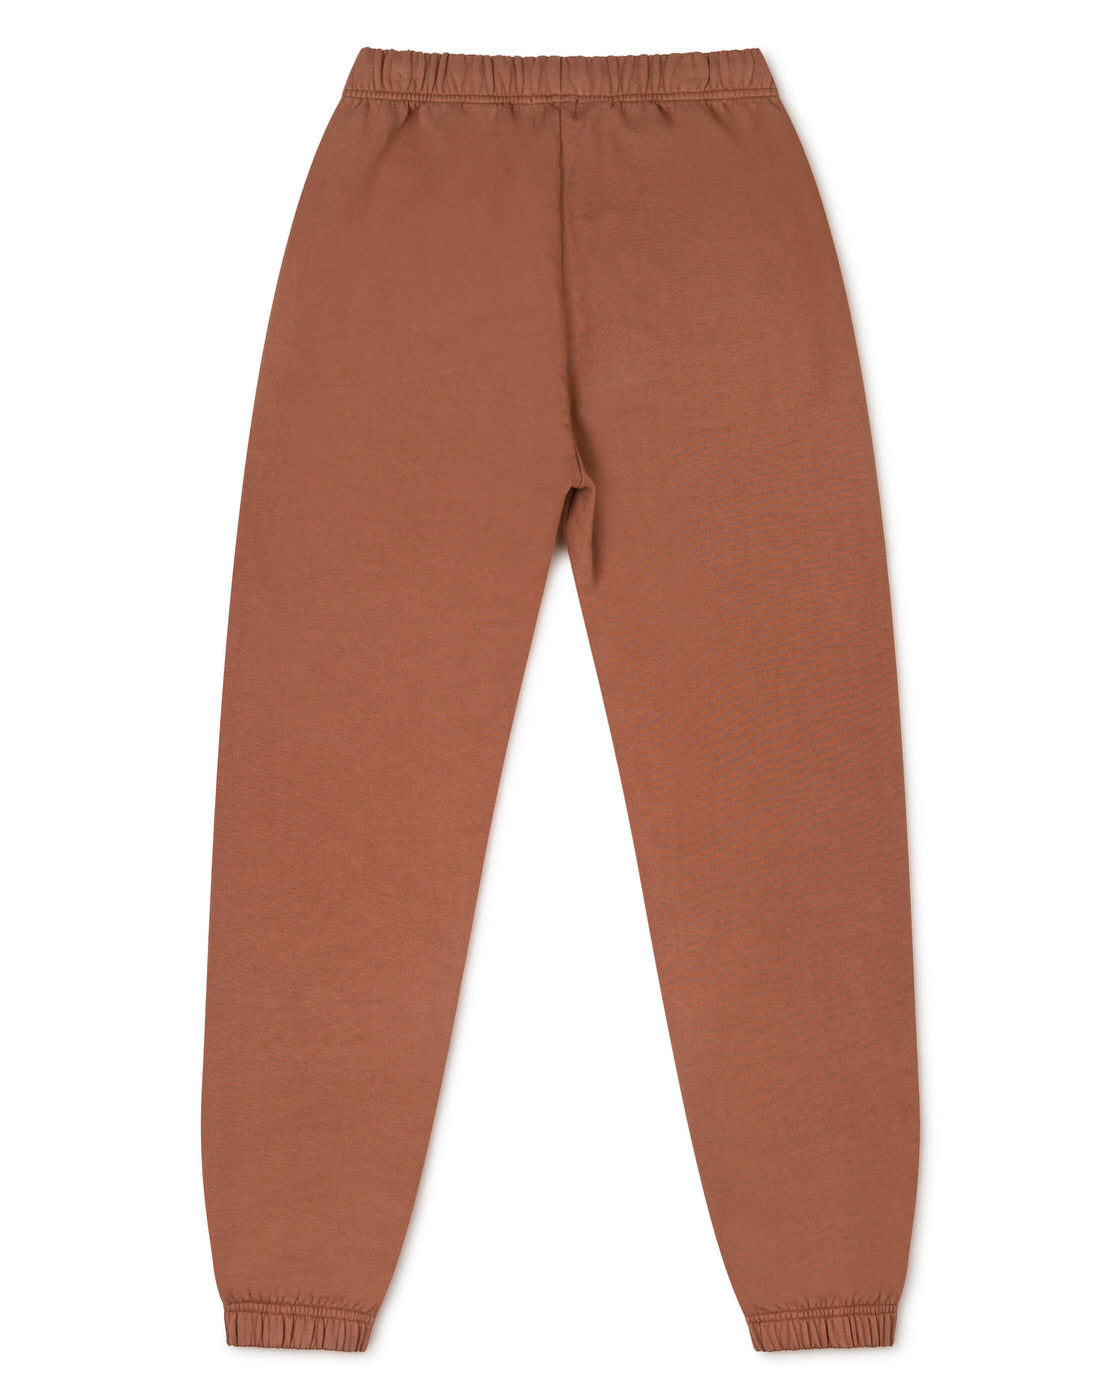 Pantalon de jogging en cèdre marron en molleton de coton biologique de Matona